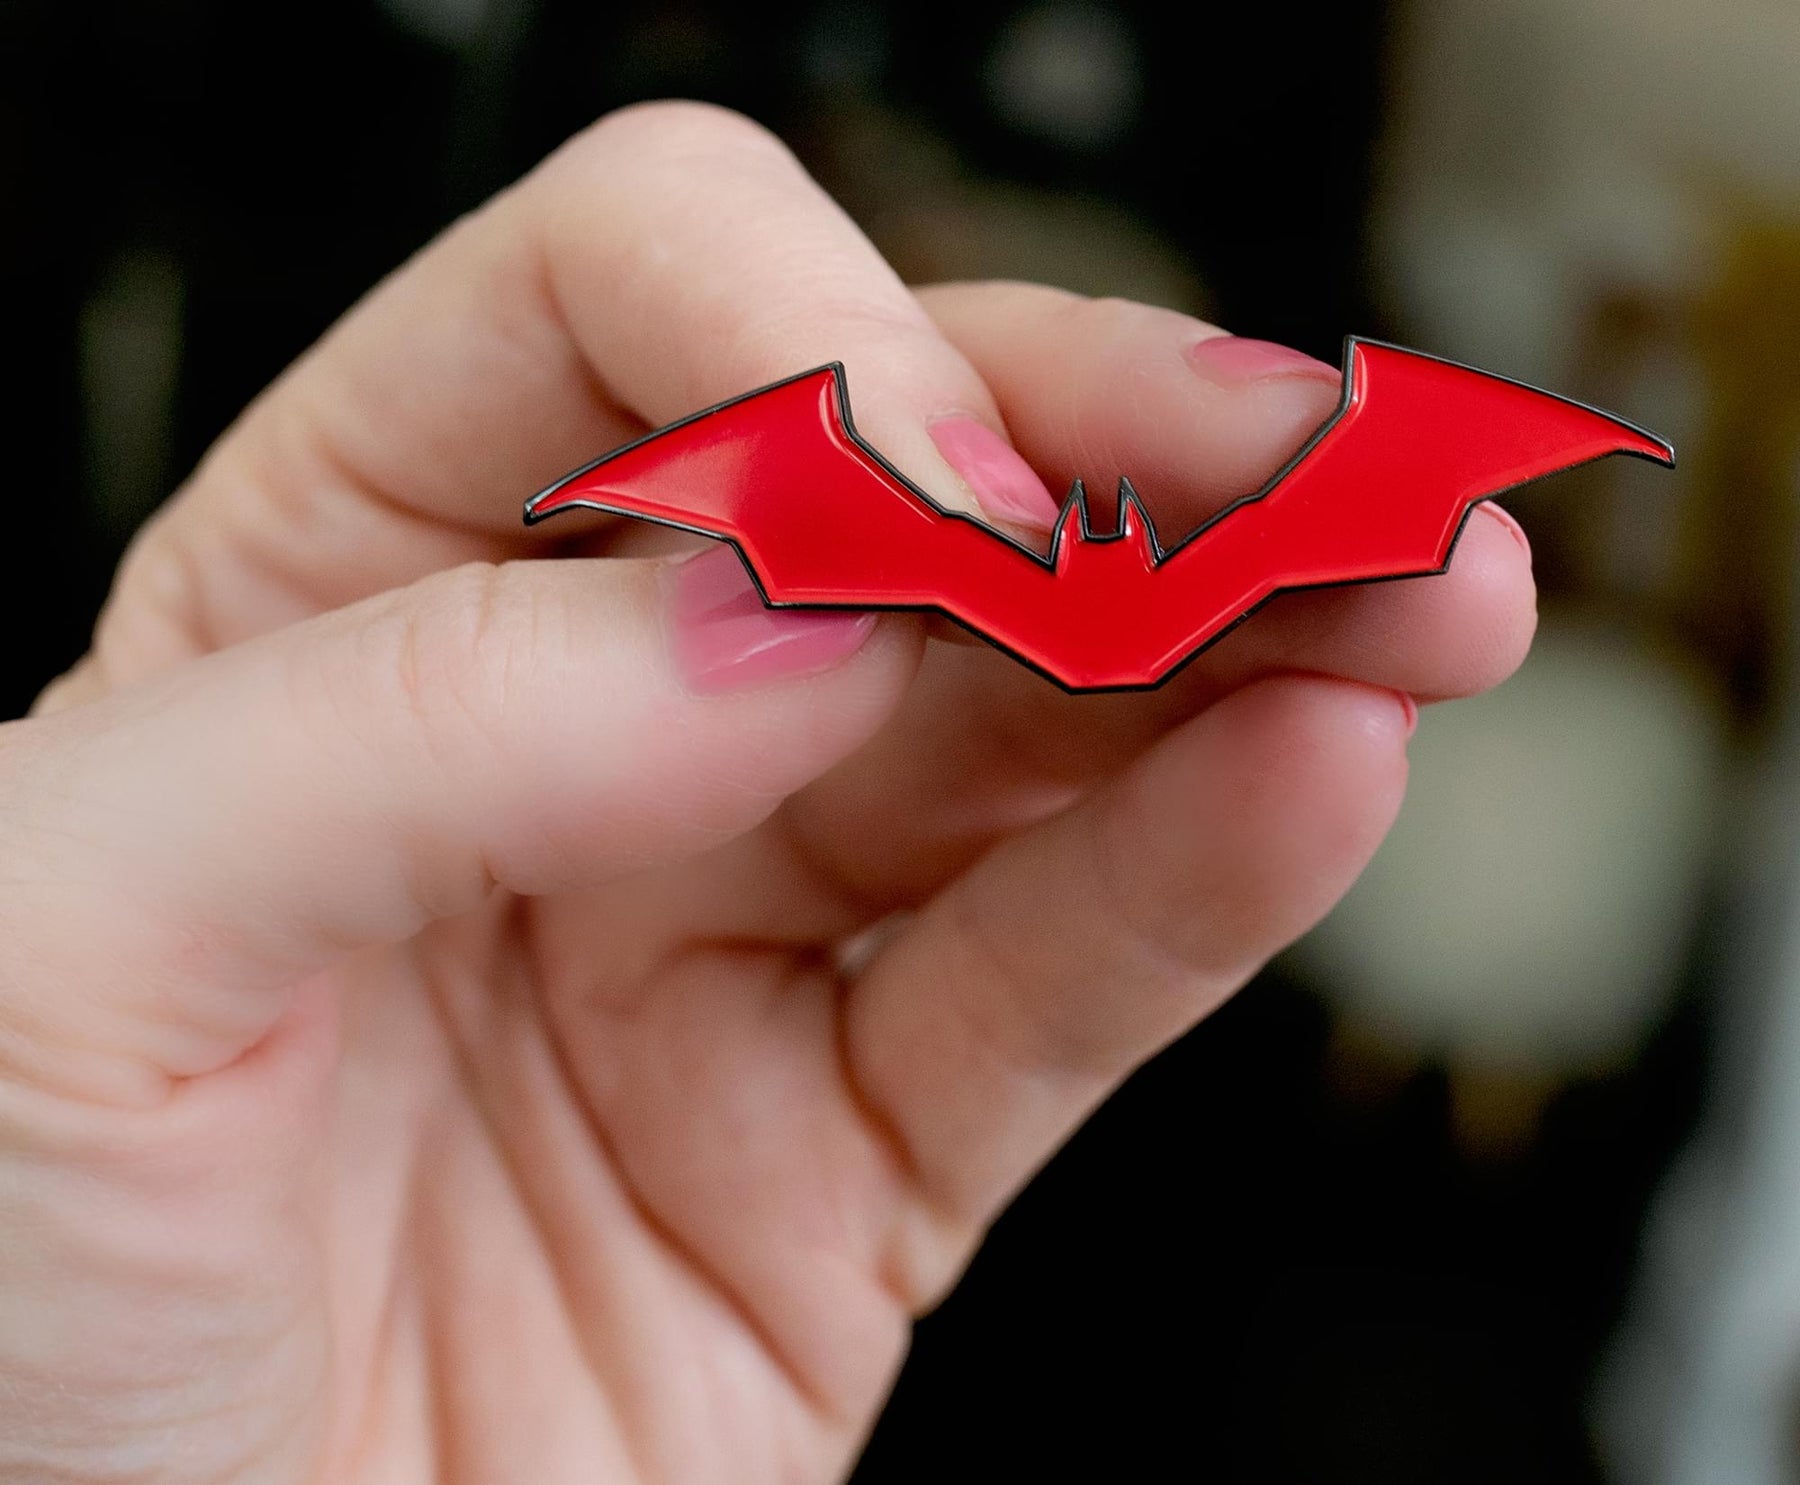 DC Comics The Batman Red Batarang Limited Edition Enamel Pin | Toynk Exclusive